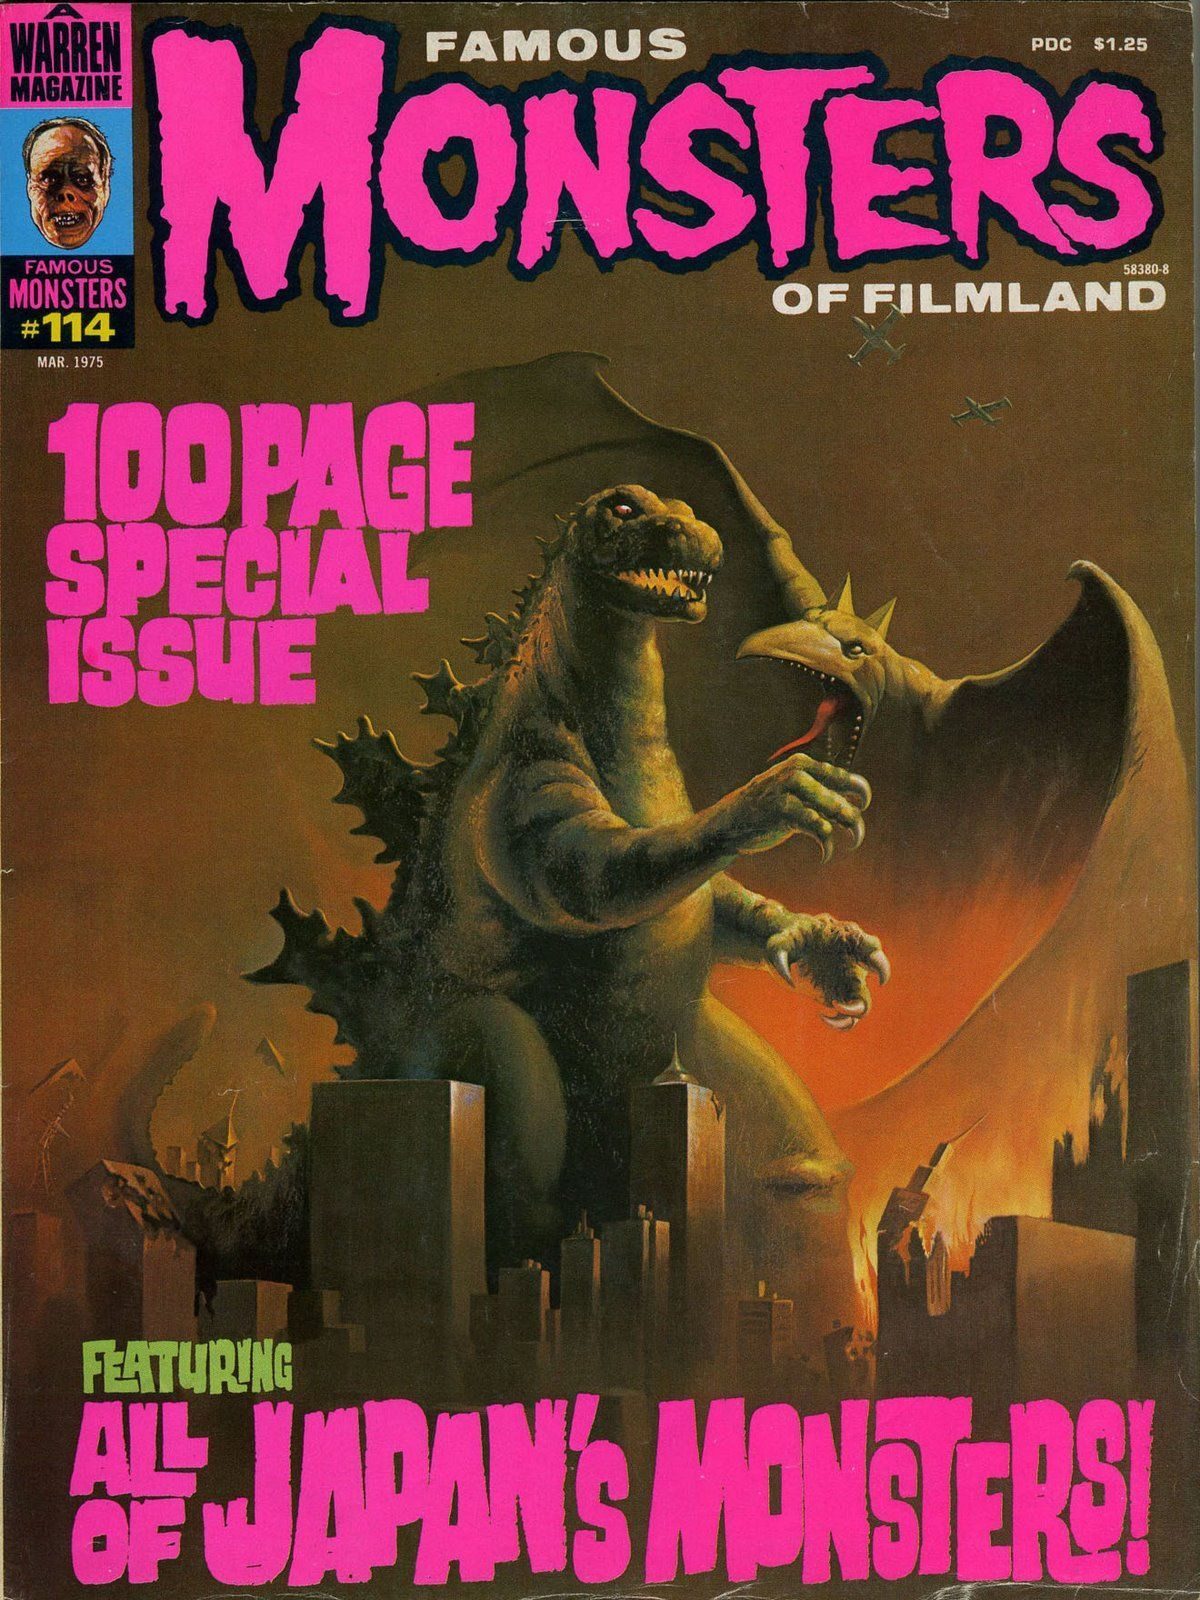 Famous Monsters of Filmland, magazine, horror films, Godzilla